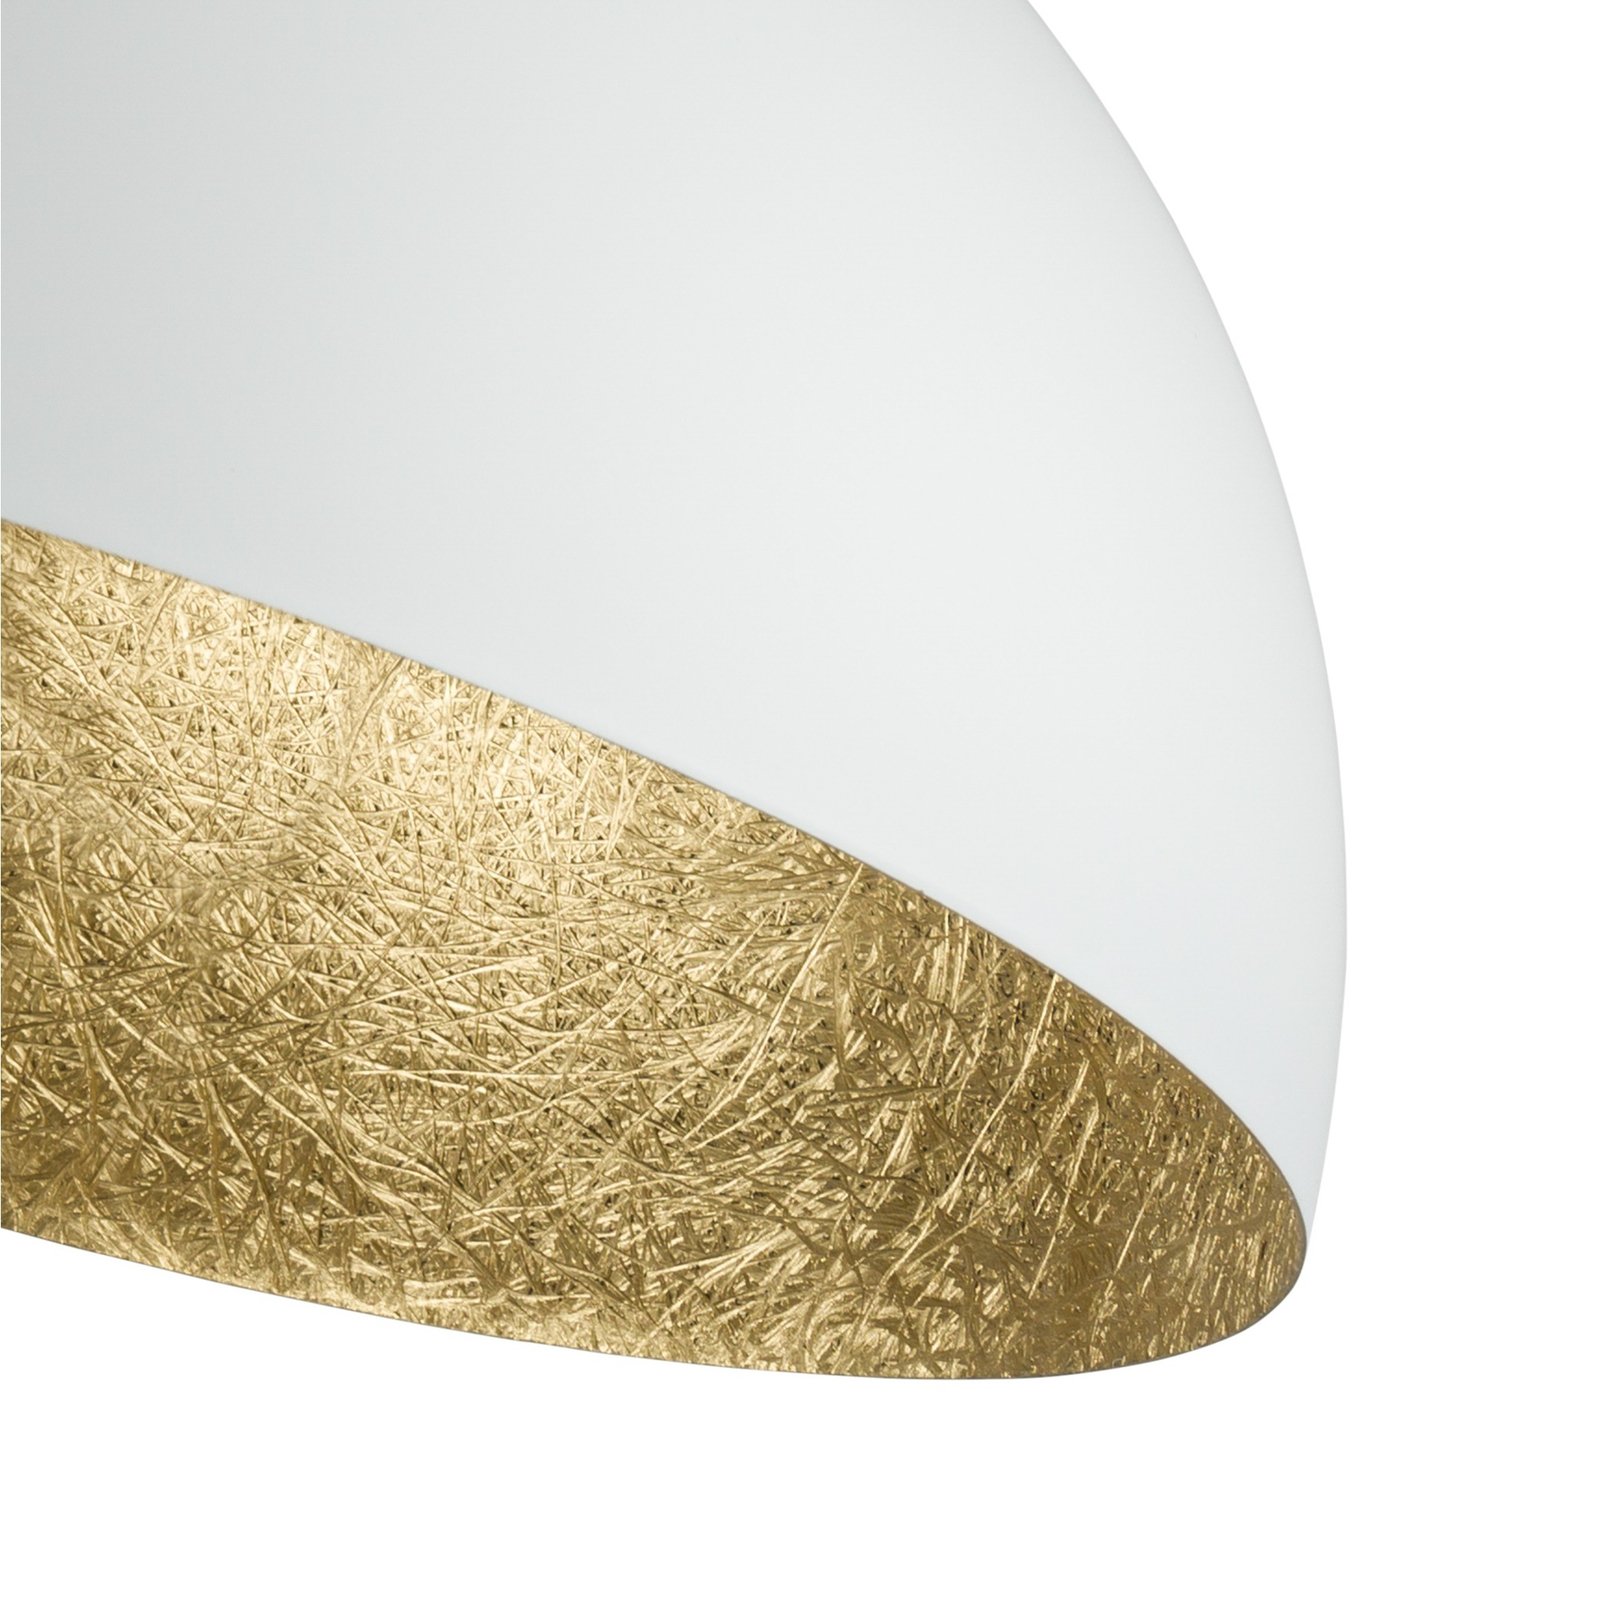 Plafondlamp Sfera, Ø 50cm, wit/goud